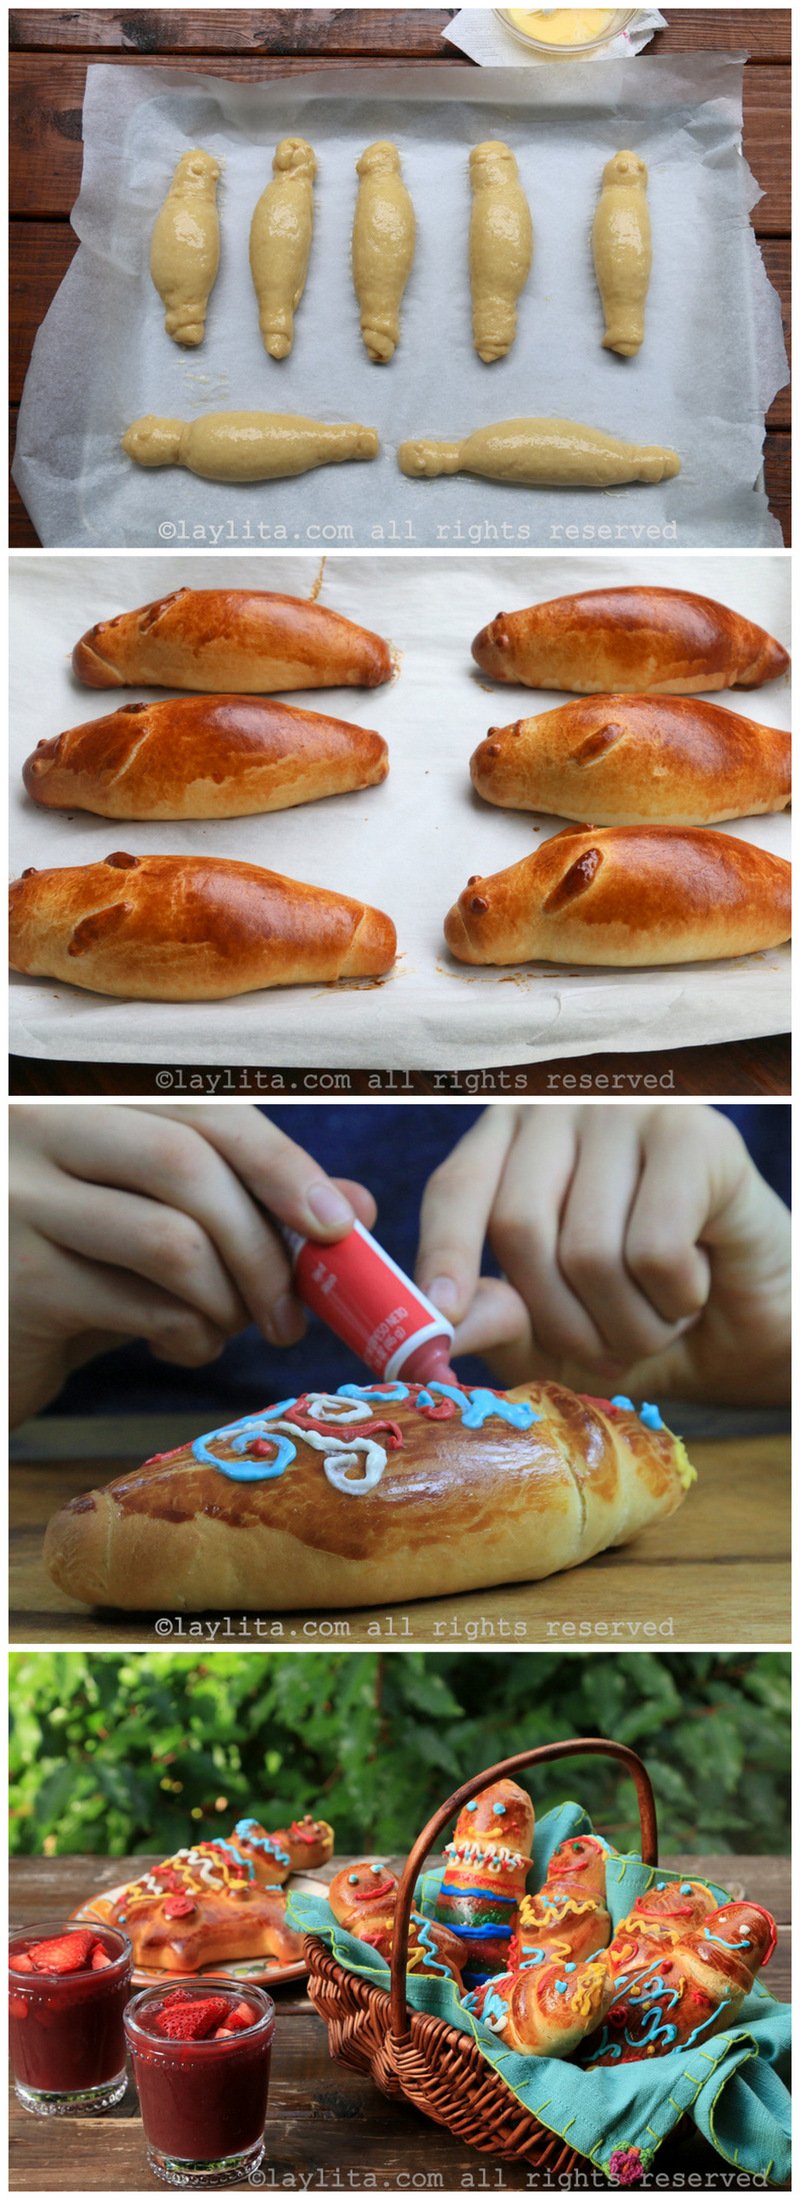 Baking and decorating Ecuadorian guaguas de pan or bread babies